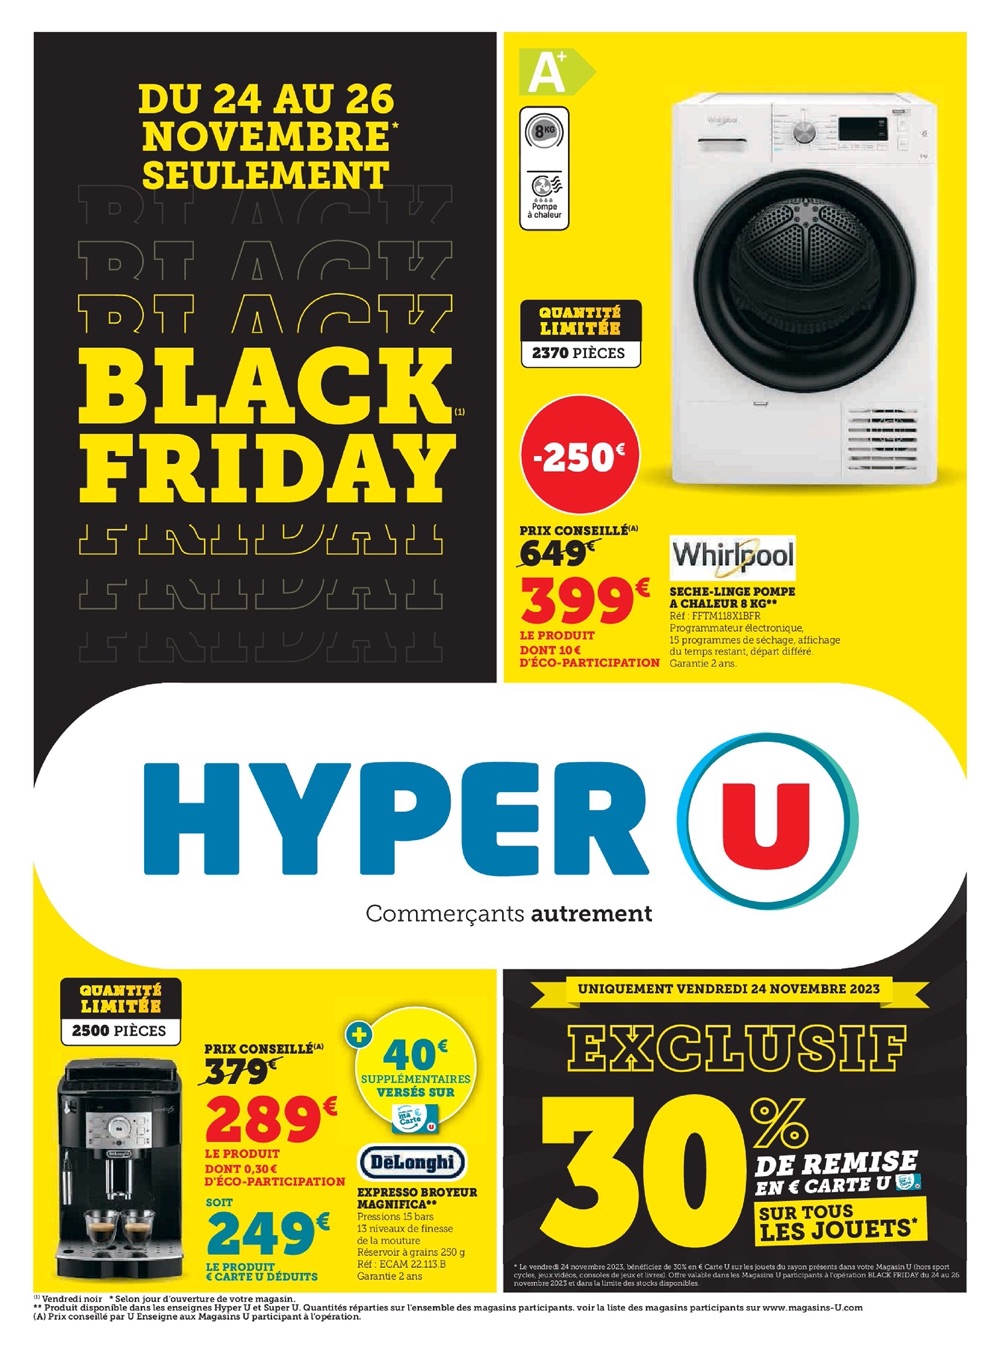 Catalogue Hyper U Black Friday 2023 1 – hyper u bf catalogue 000001